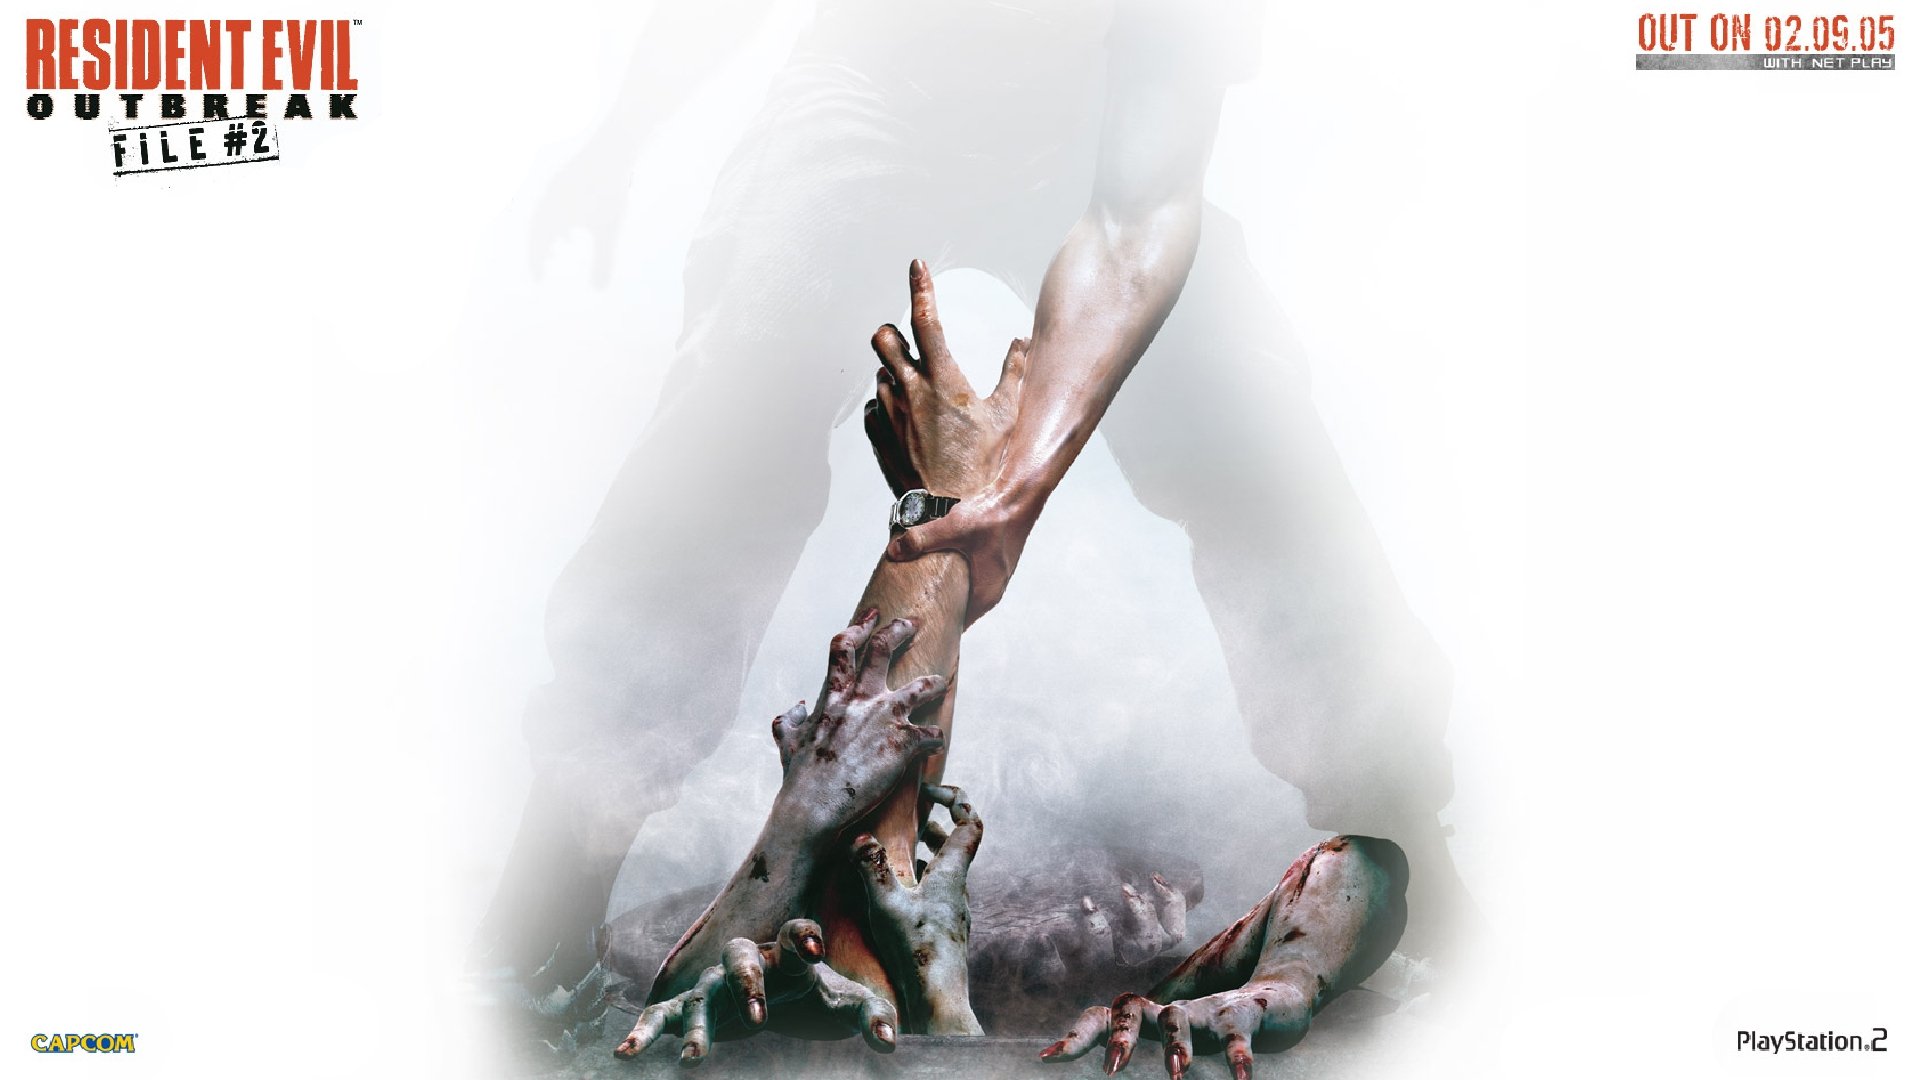 Resident Evil Outbreak HD Wallpaper Background Image 1920x1080 1920x1080